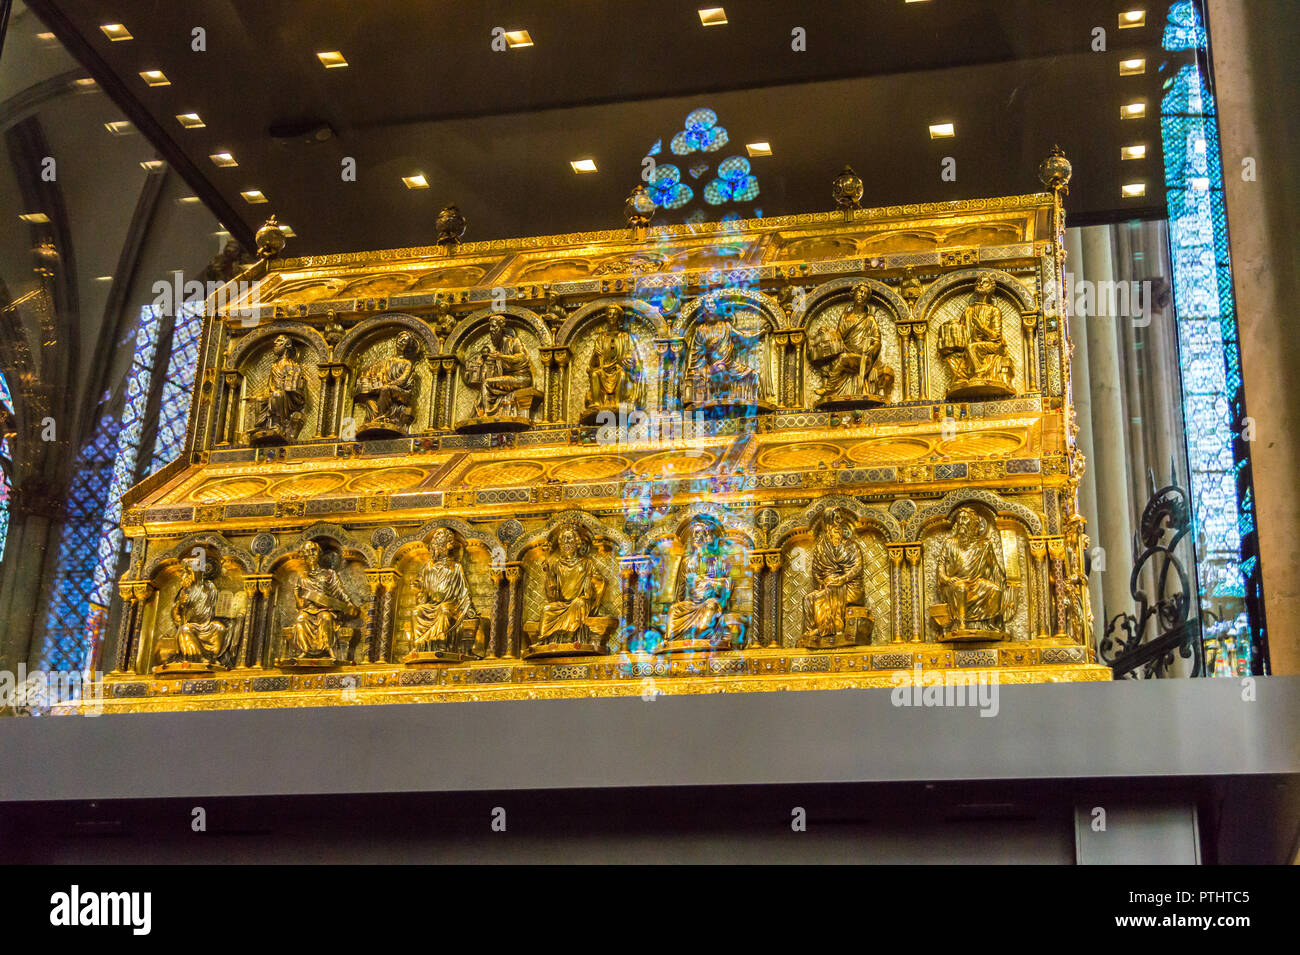 Dreikönigsschrein, Shrine of the Three Kings gold reliquary, putative relics of the Magi, 12th century, Köln, Nordrhein-Westfalen, Germany Stock Photo